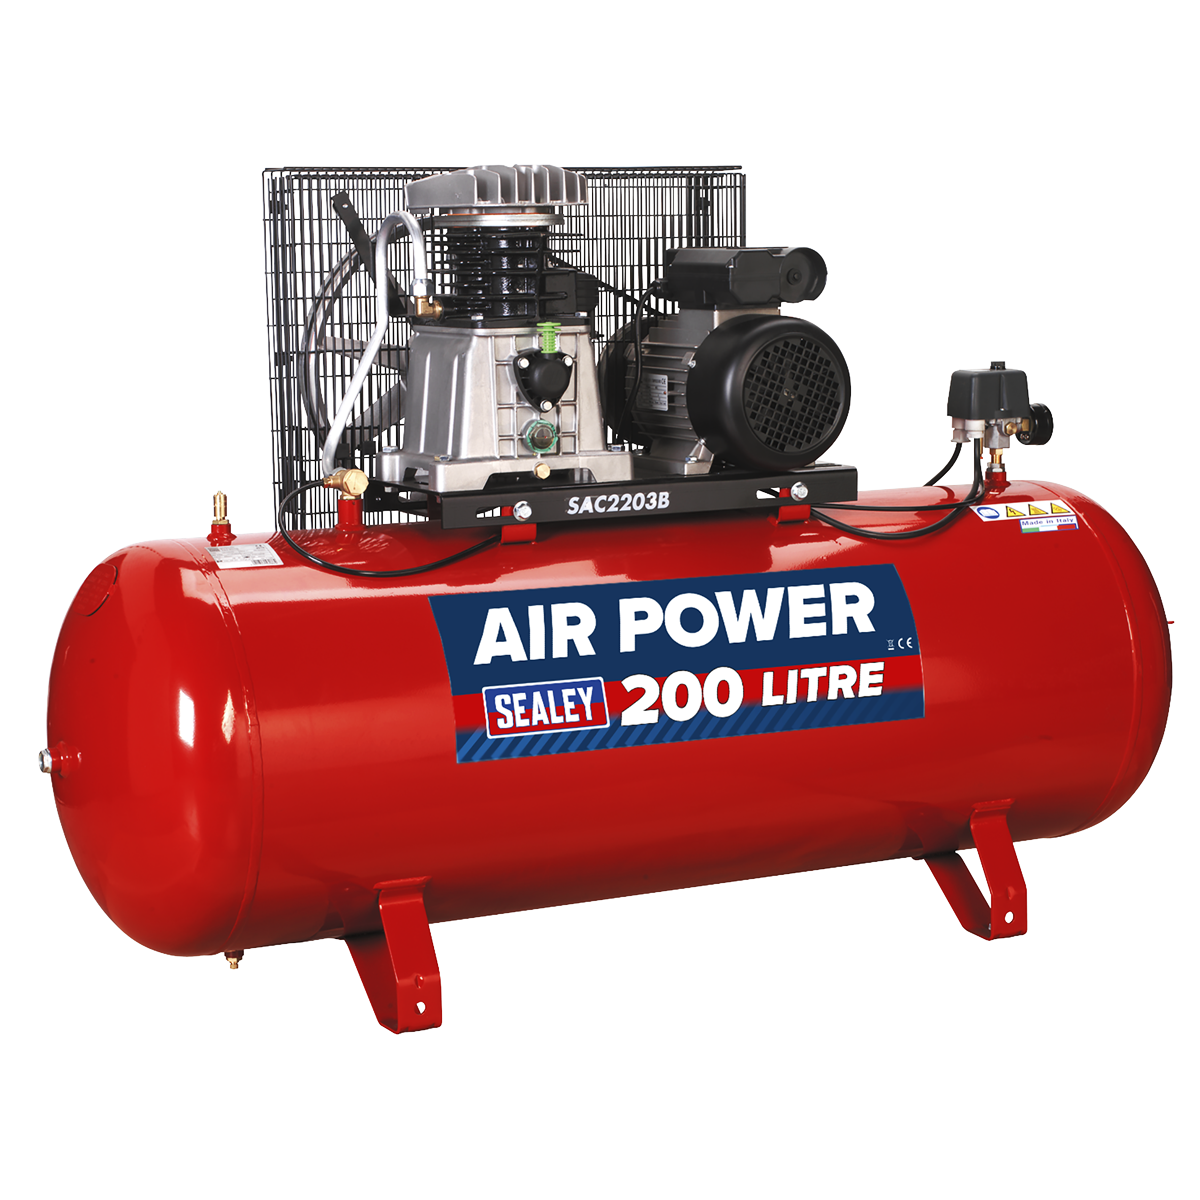 Sealey industrial air compressor for professional workshops or garages SAC2203B